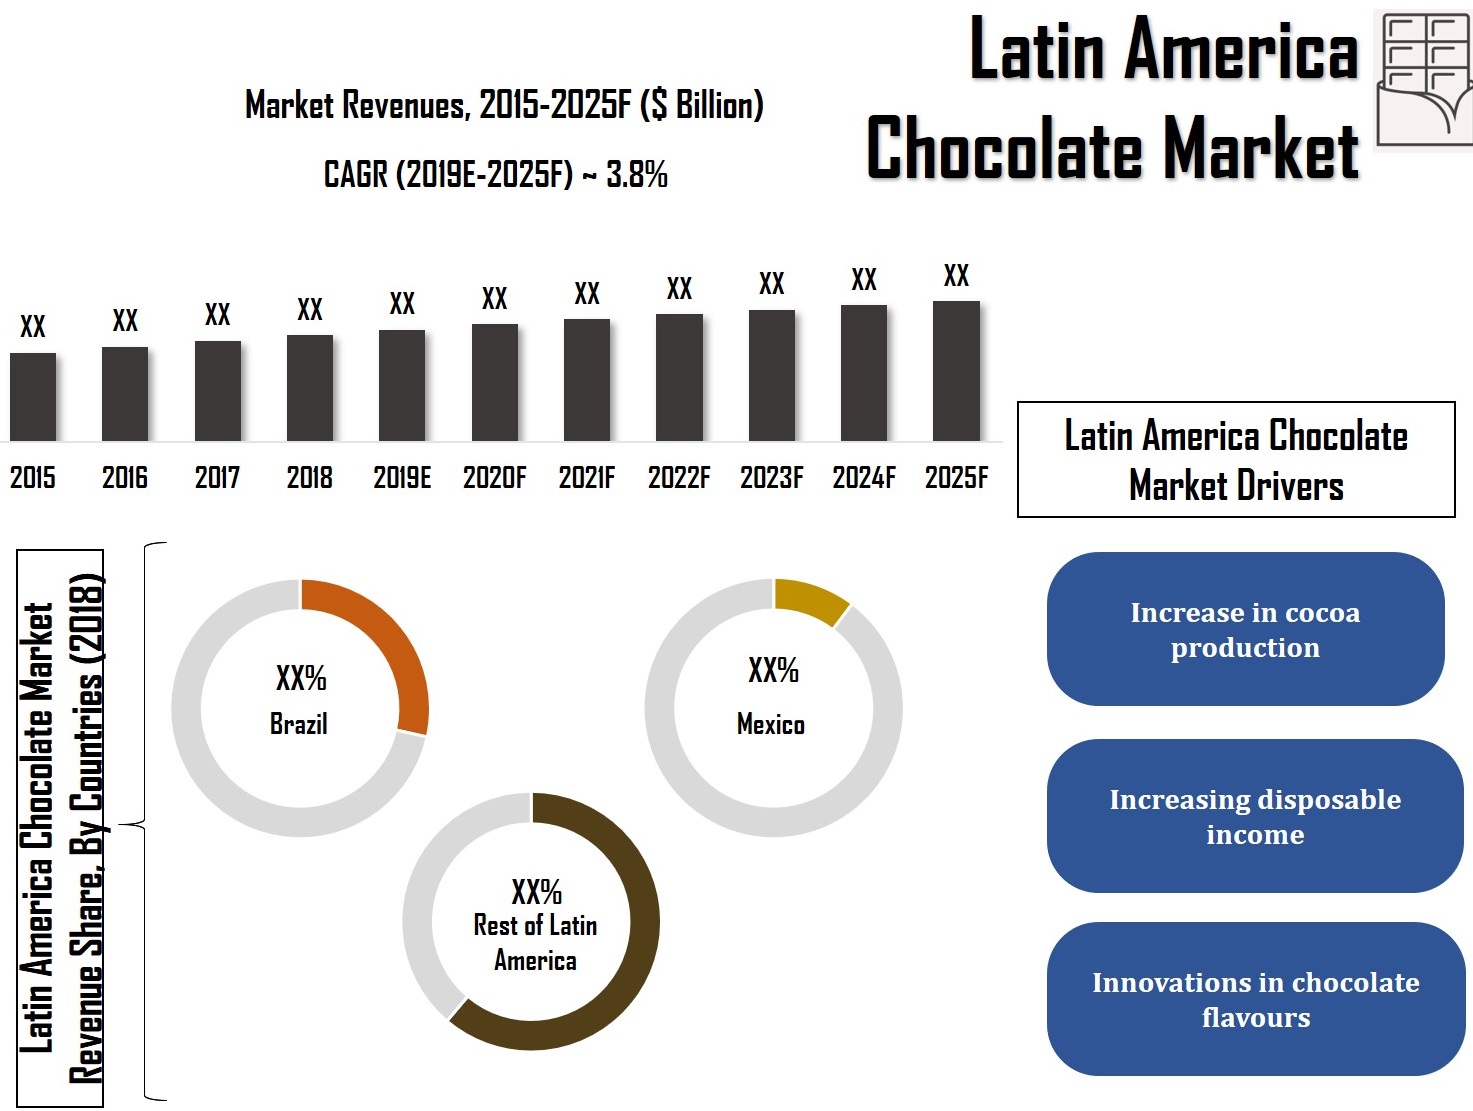 Latin America Chocolate Market overview